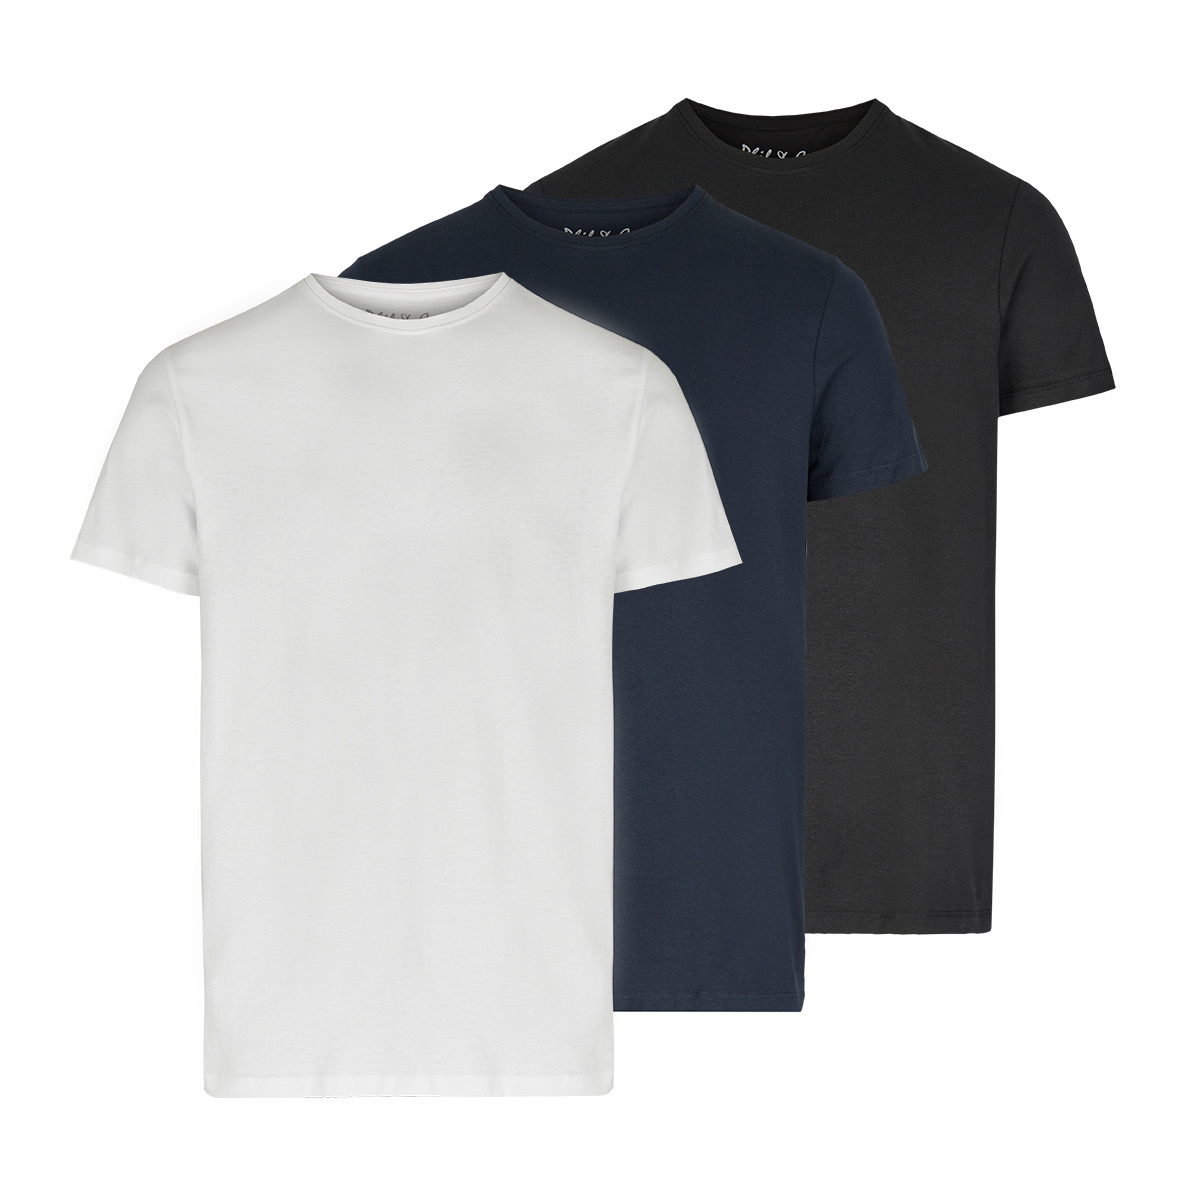 Phil & Co Ondershirt Heren T-shirt Ronde Hals Regular Fit 3-Pack Zwart Blauw Wit - Maat L